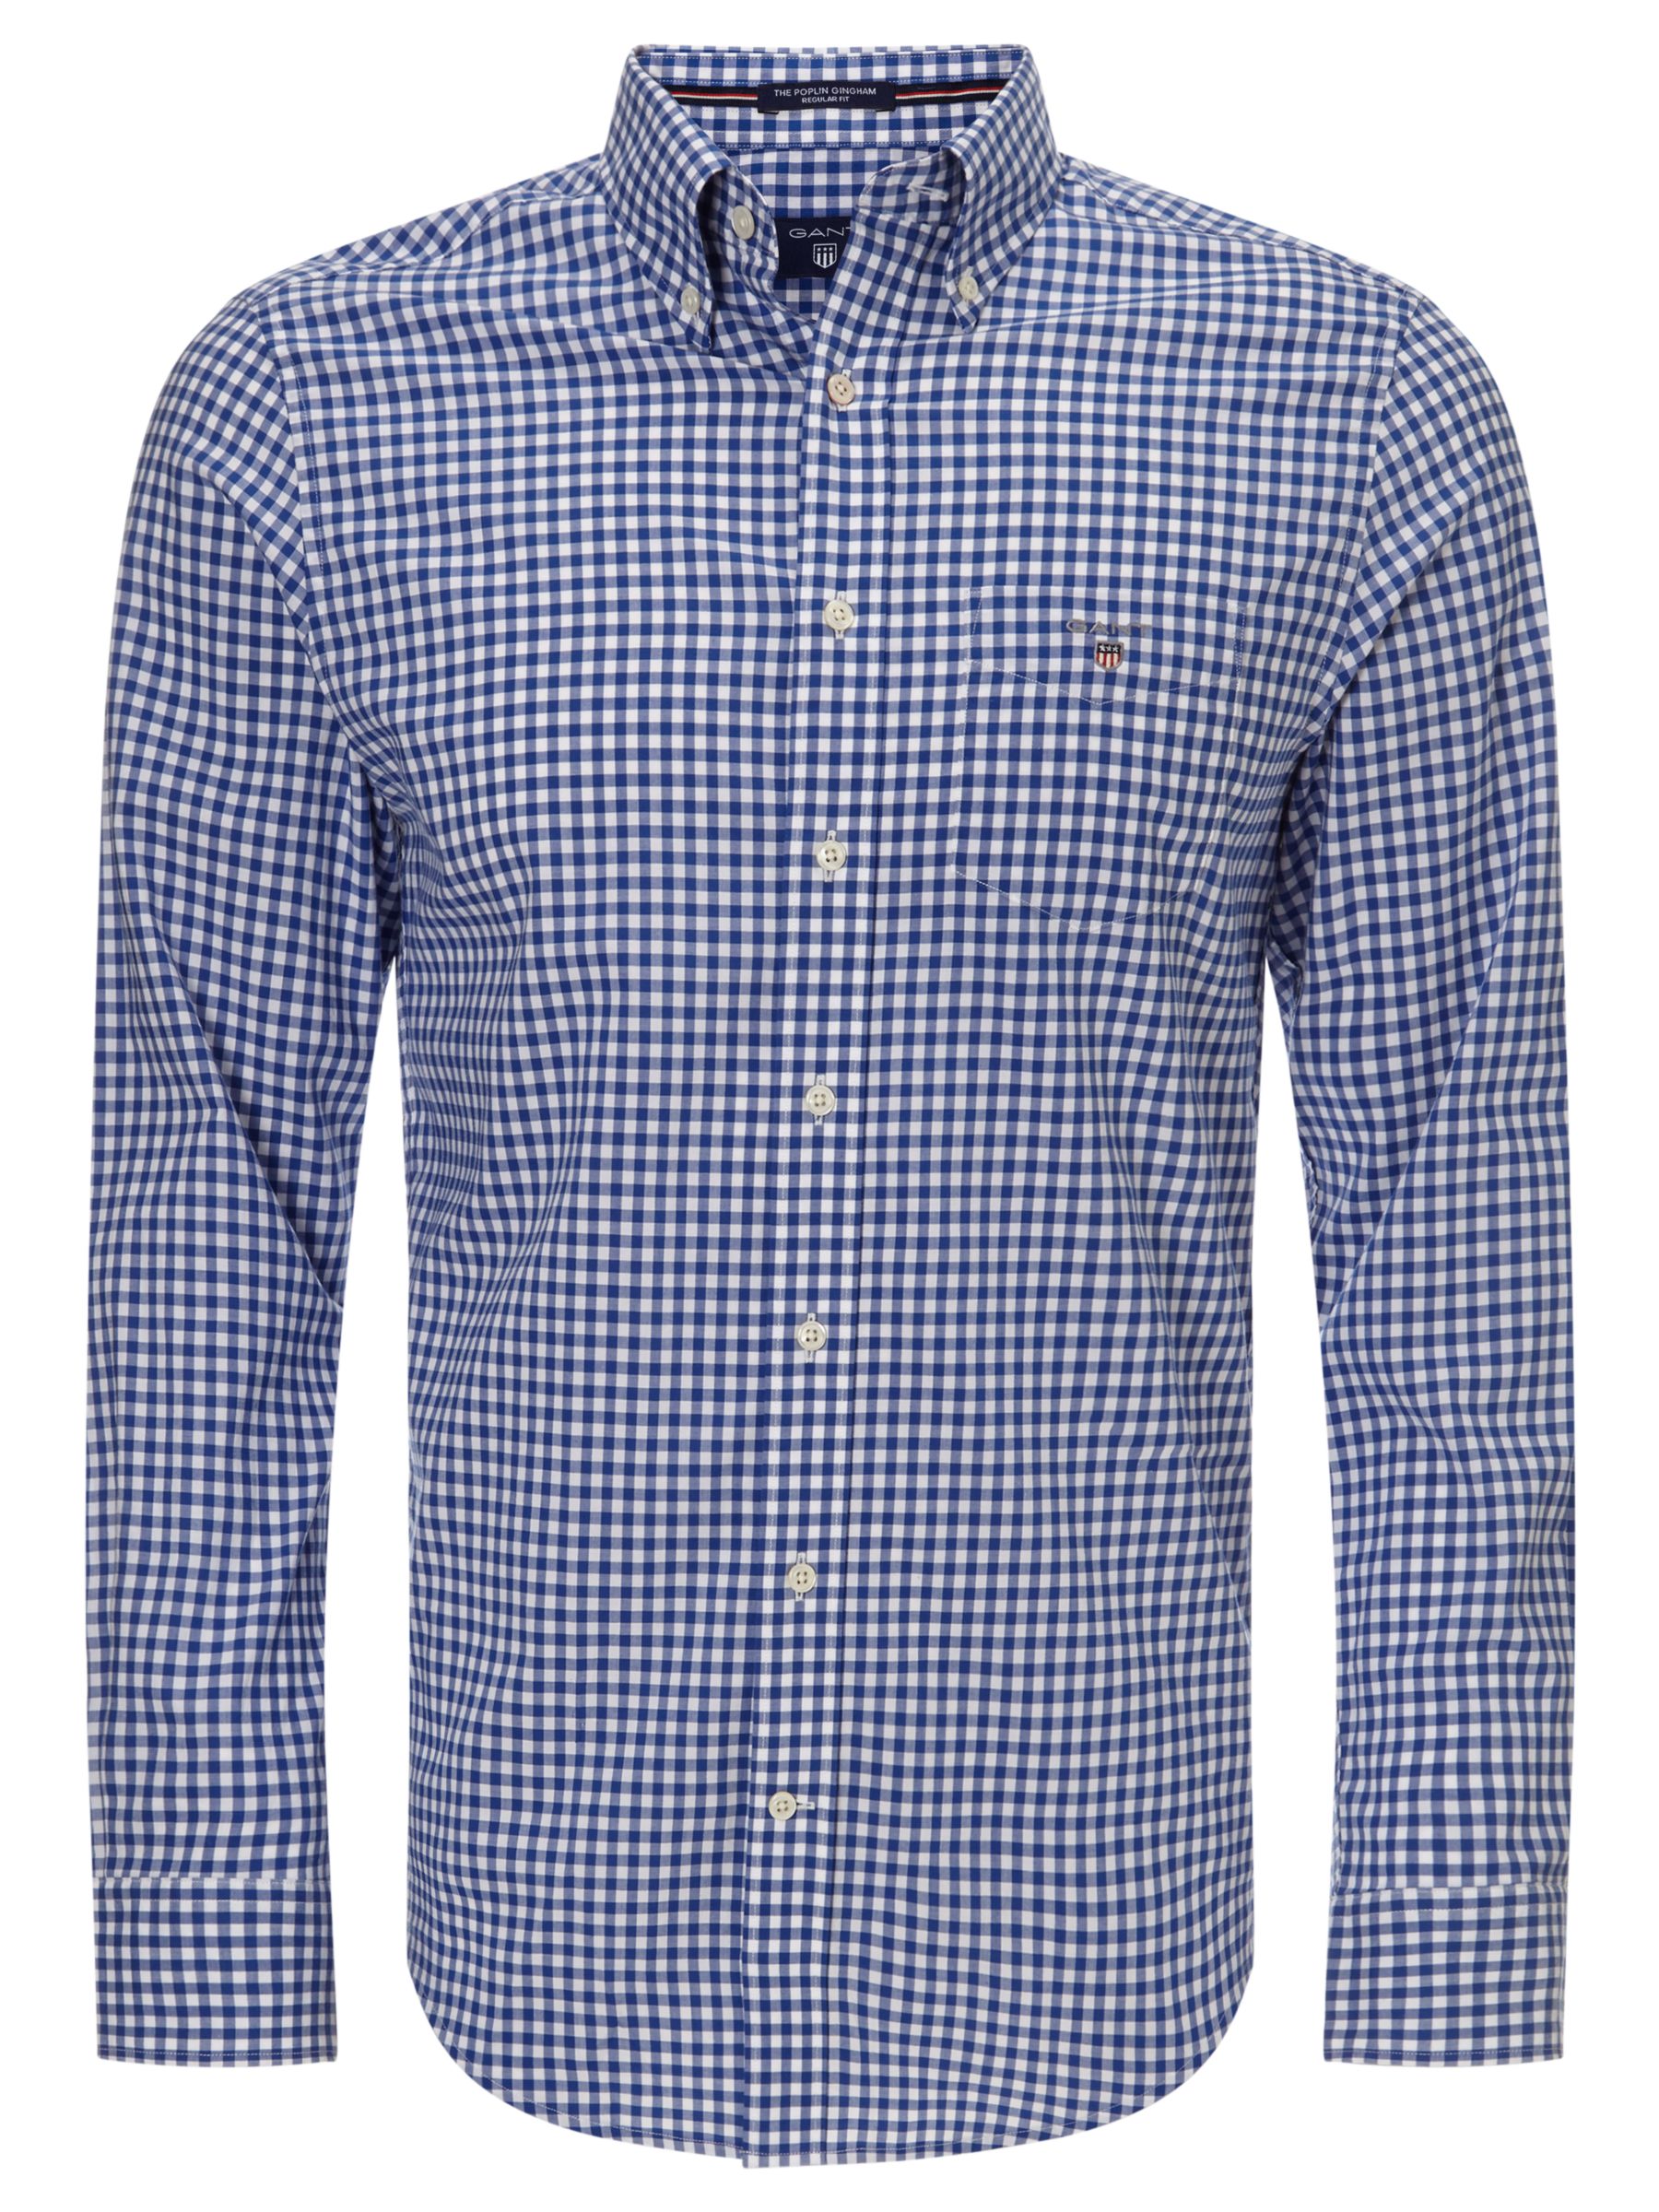 GANT Regular Fit Poplin Gingham Shirt, Yale Blue at John Lewis & Partners